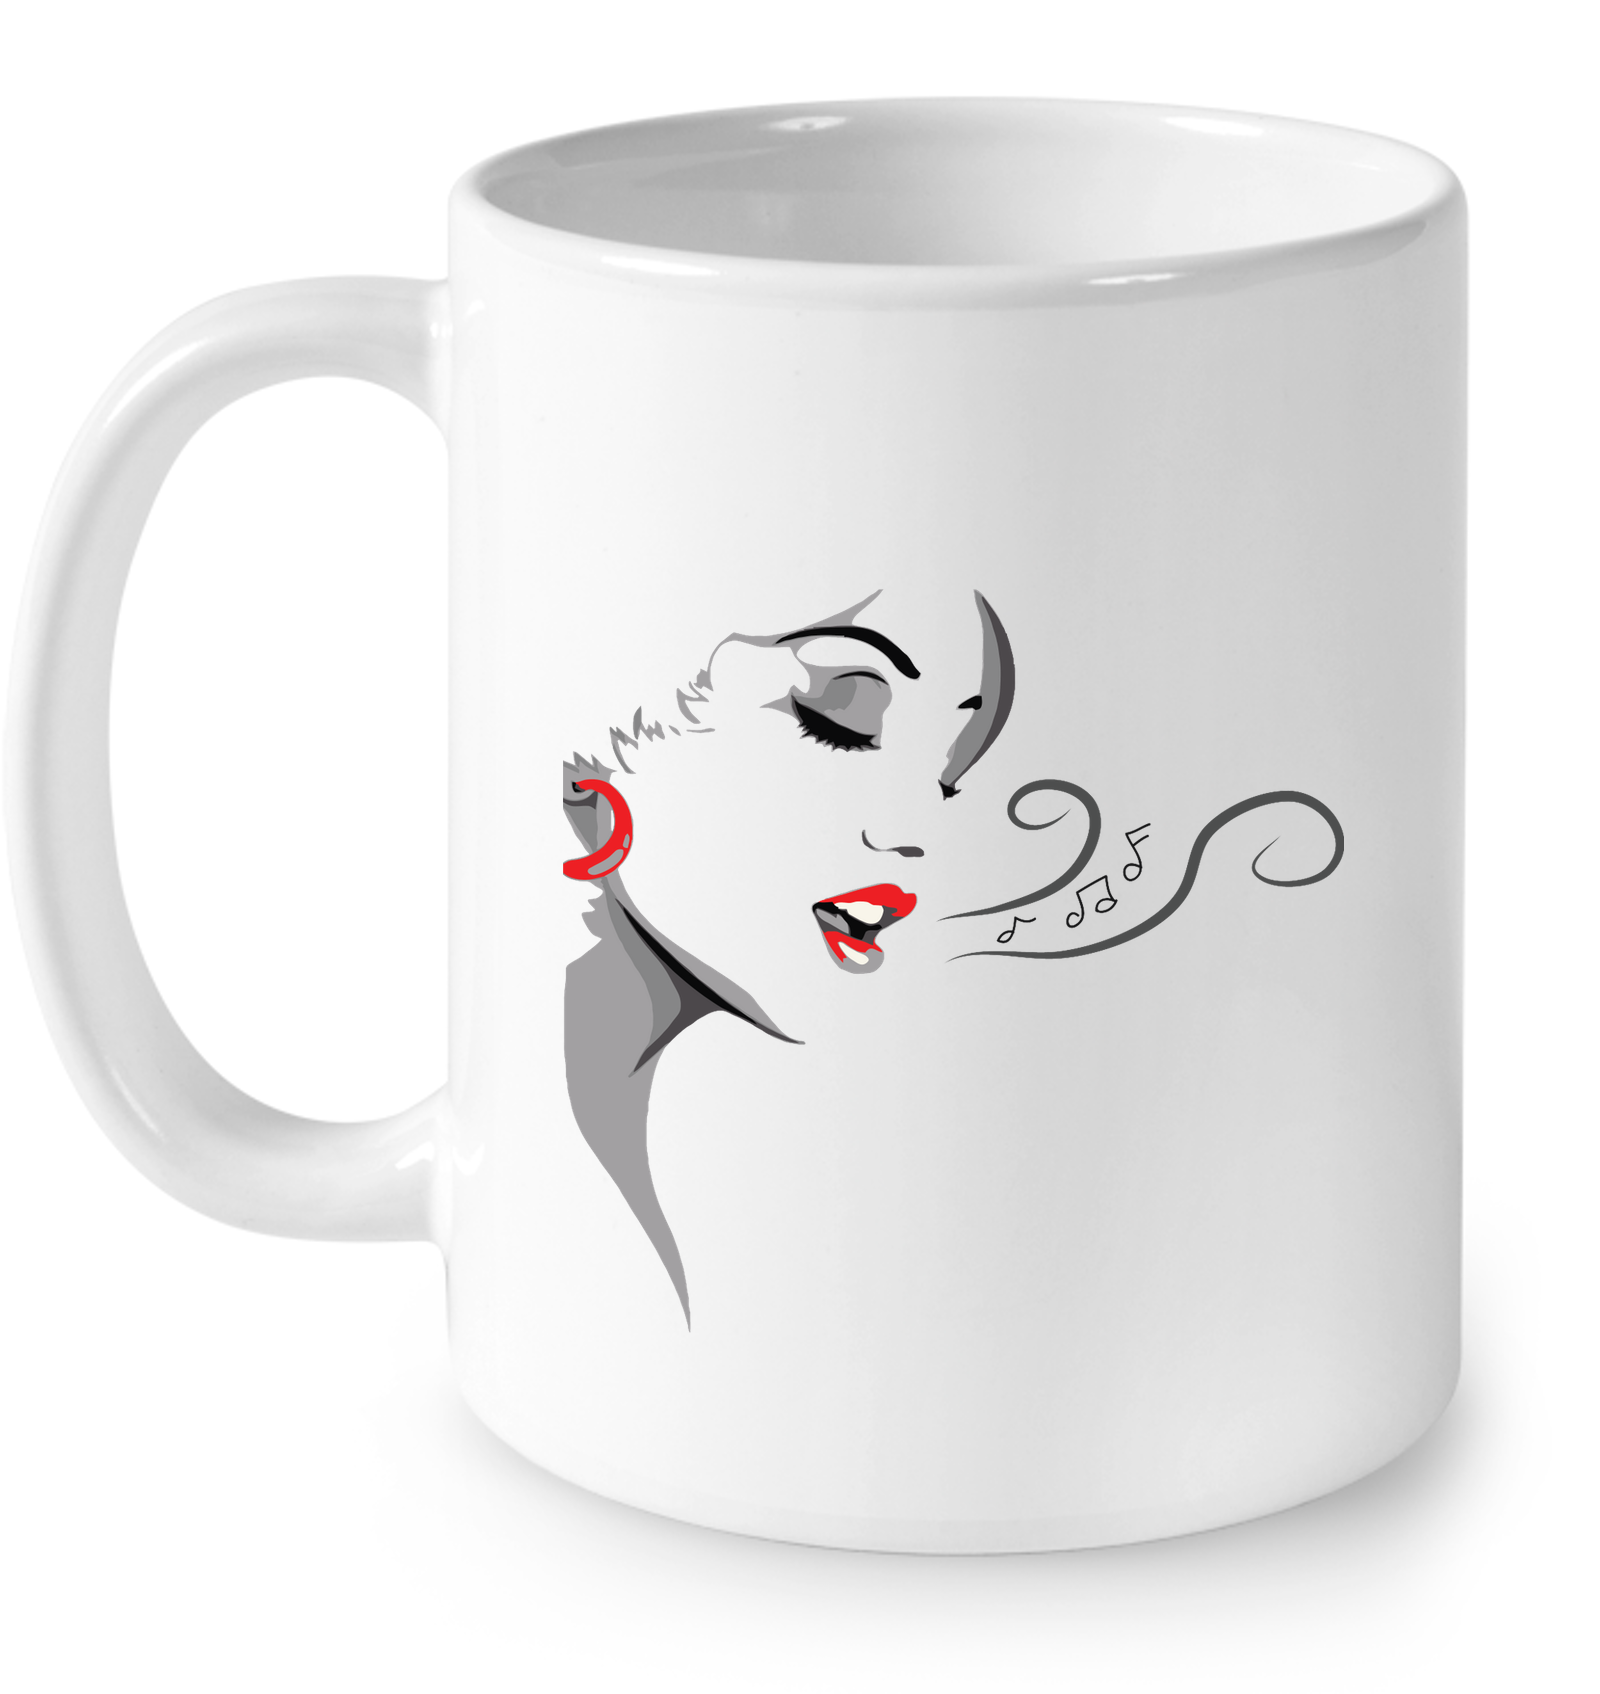 Woman Singing a Tune - Ceramic Mug